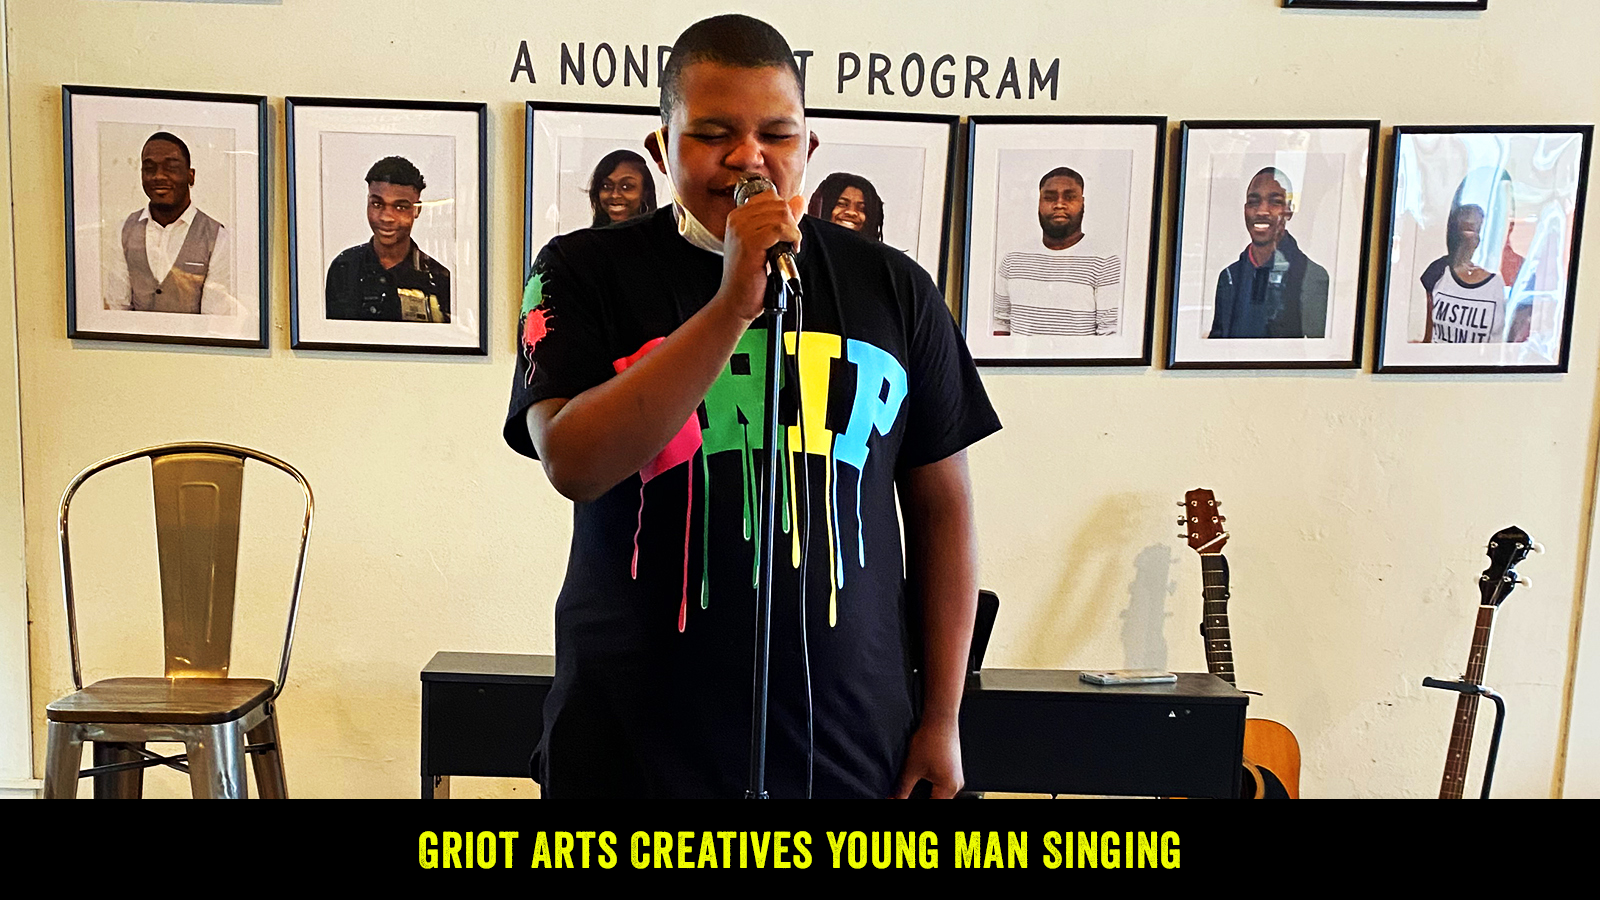 Griot Arts Creatives Young Man Singing